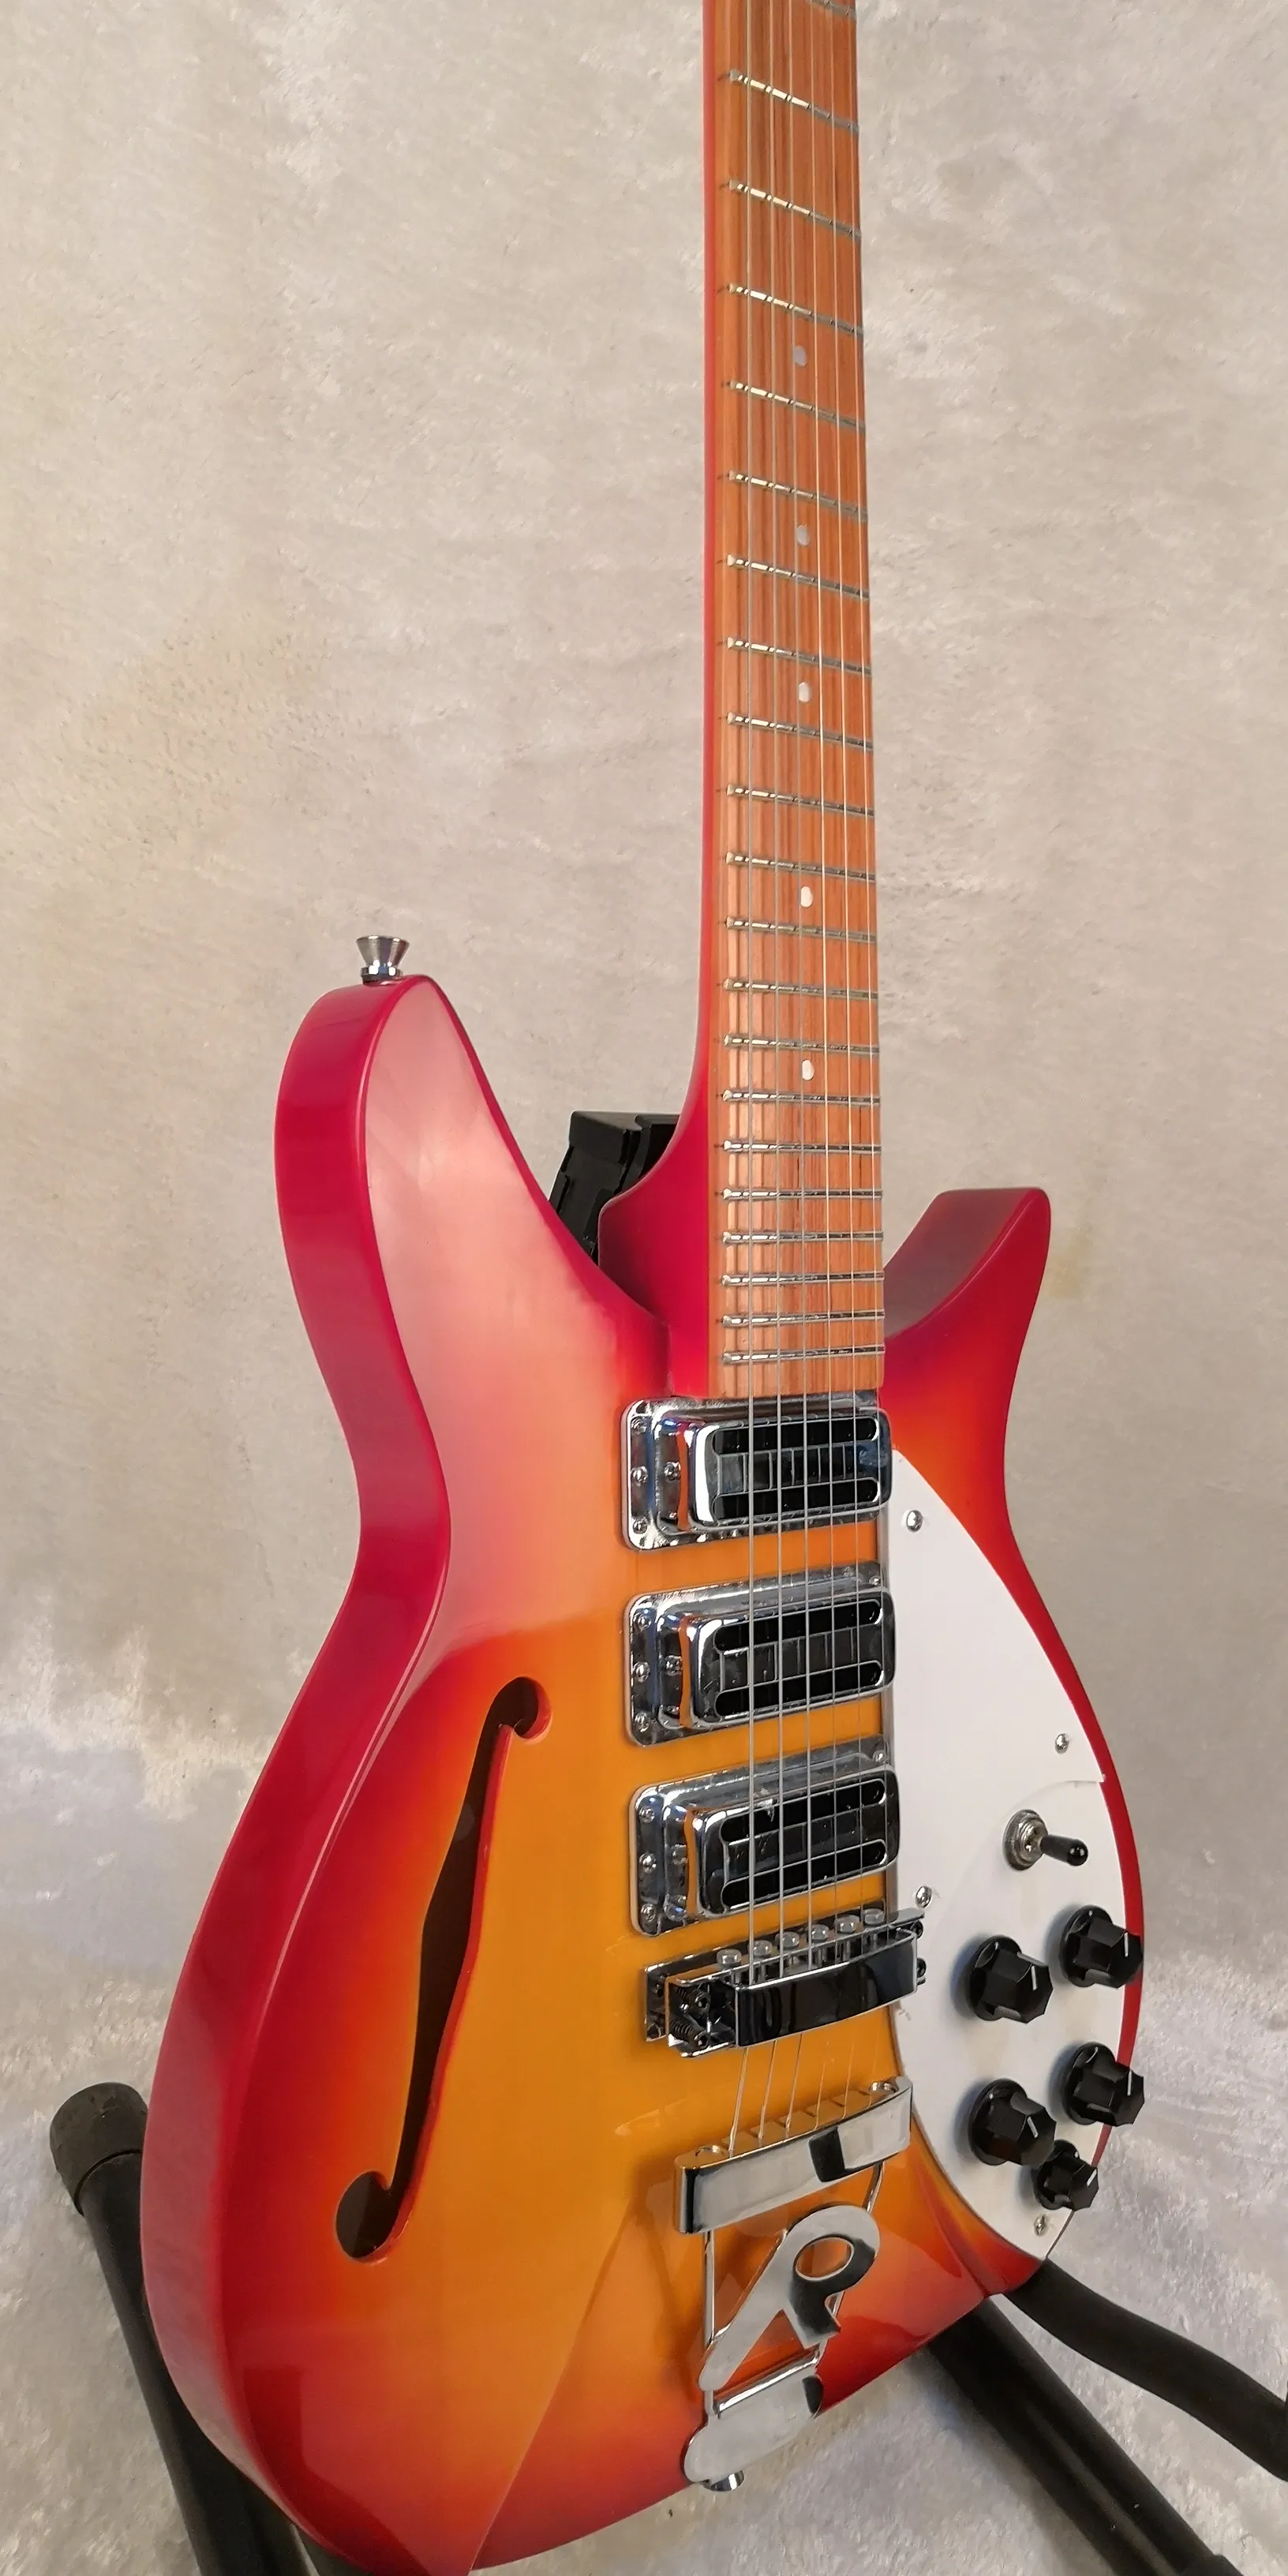 John Lennon 325 Cherry Sunburst Semi Hollow Body Electric Guitar Short Scale 527mm, 3 Toaster Pickups, Single F Hole, escala pintada com laca, R Tailpiece